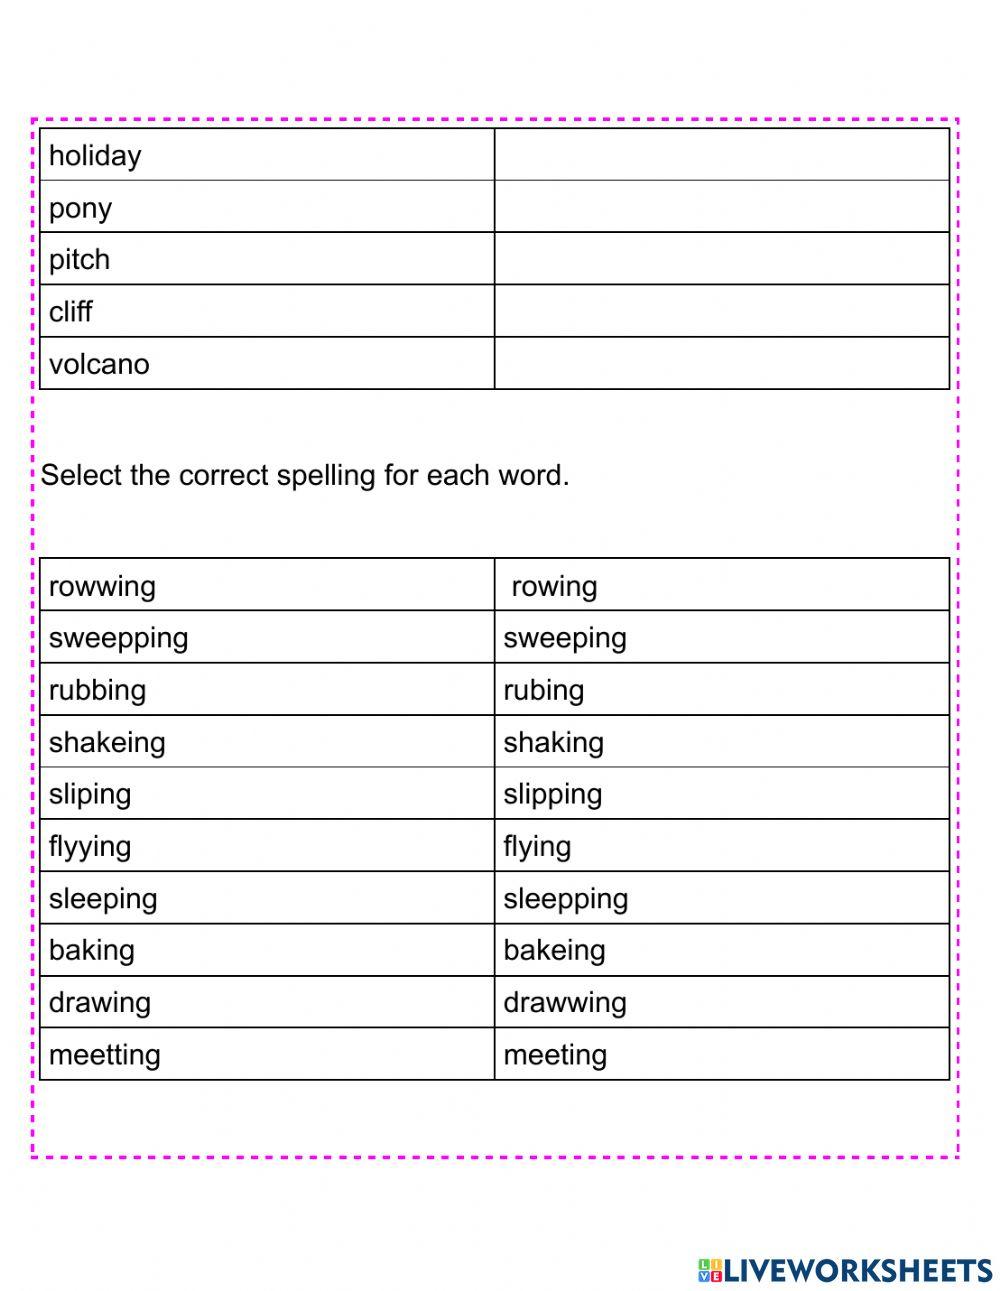 Word Study- Spelling